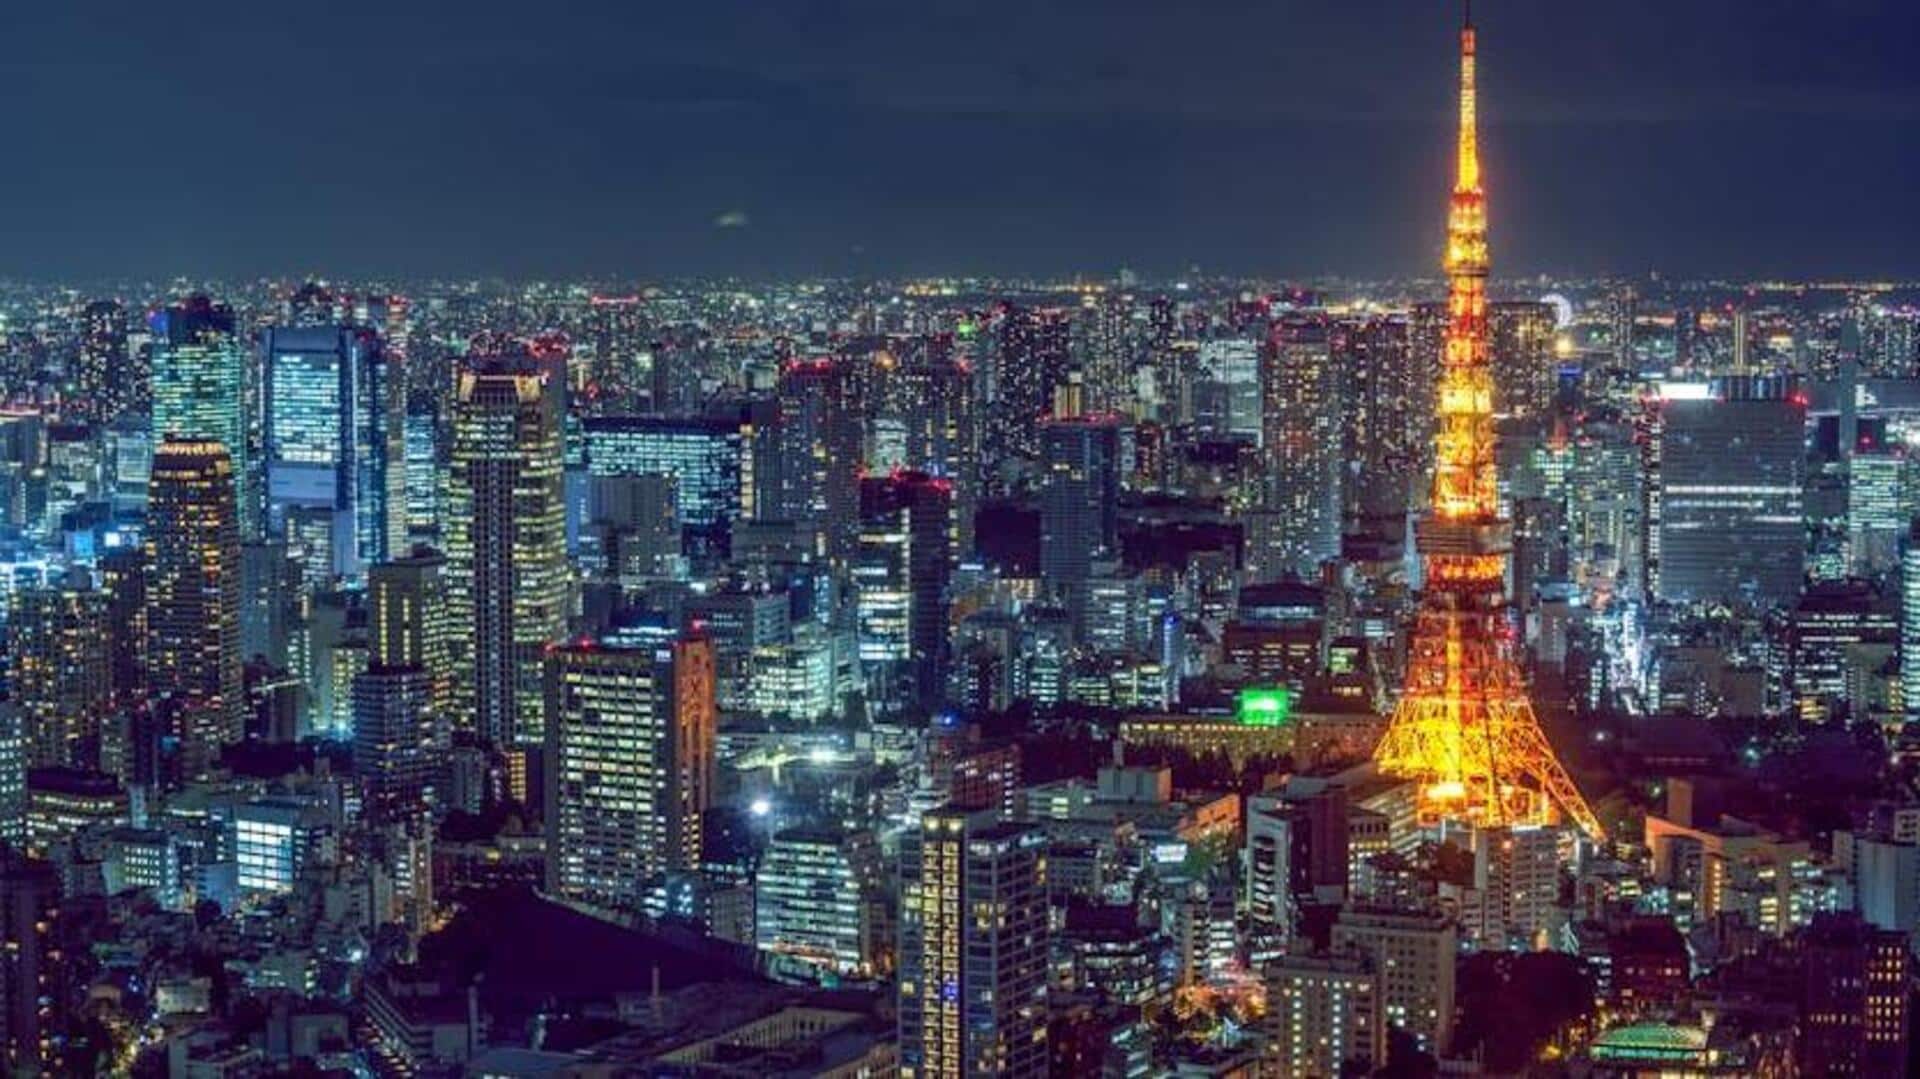 Tokyo's nighttime photo adventure for avid photographers